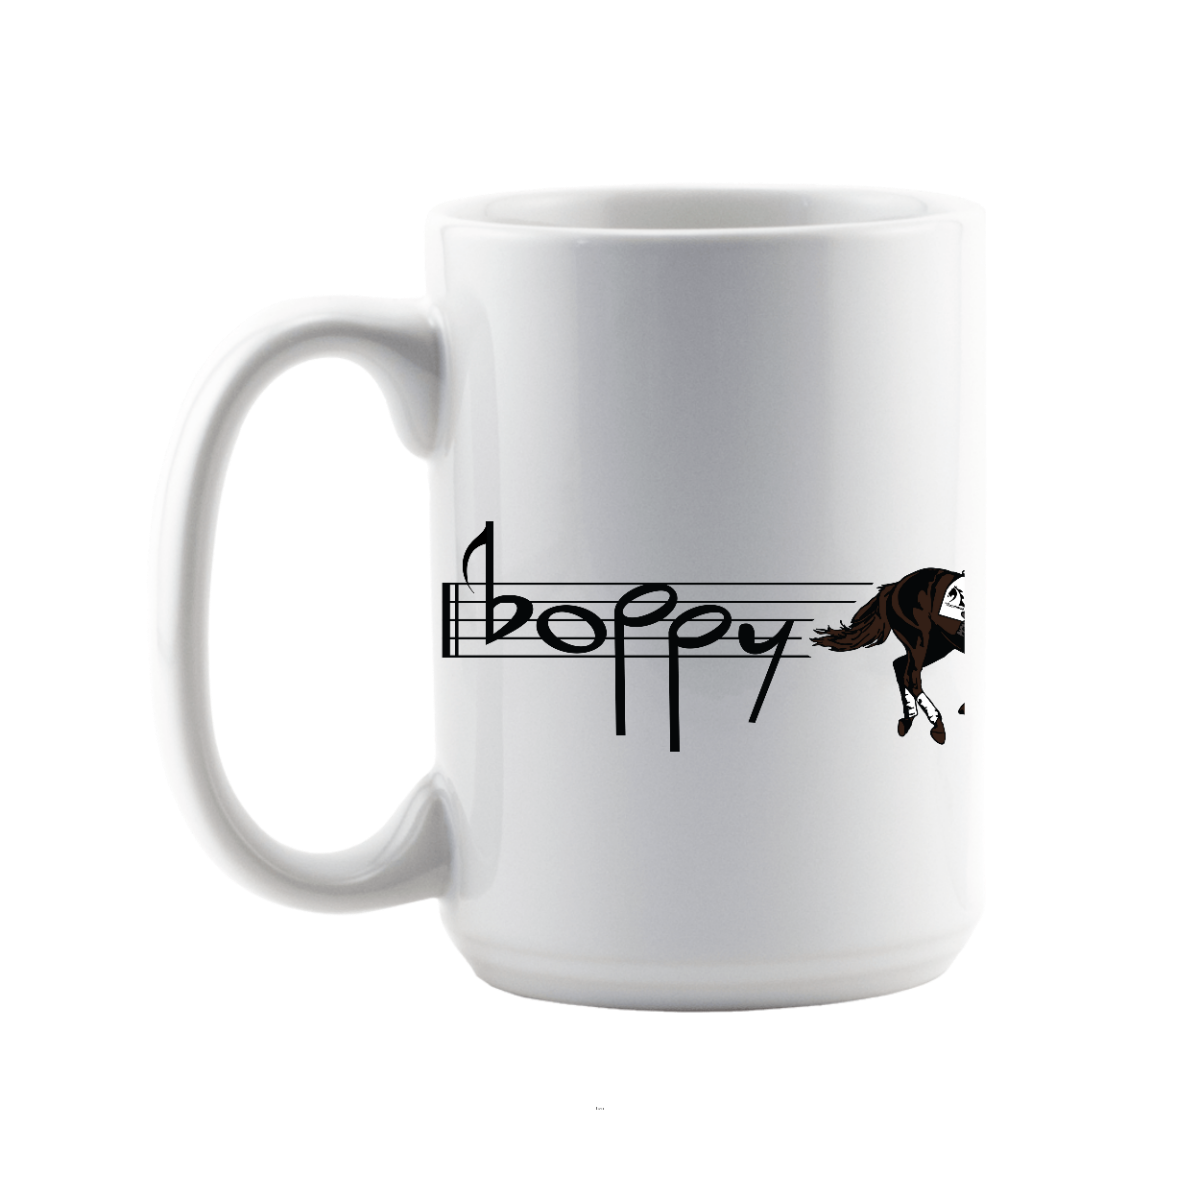 15 oz Boppy Coffee Cup